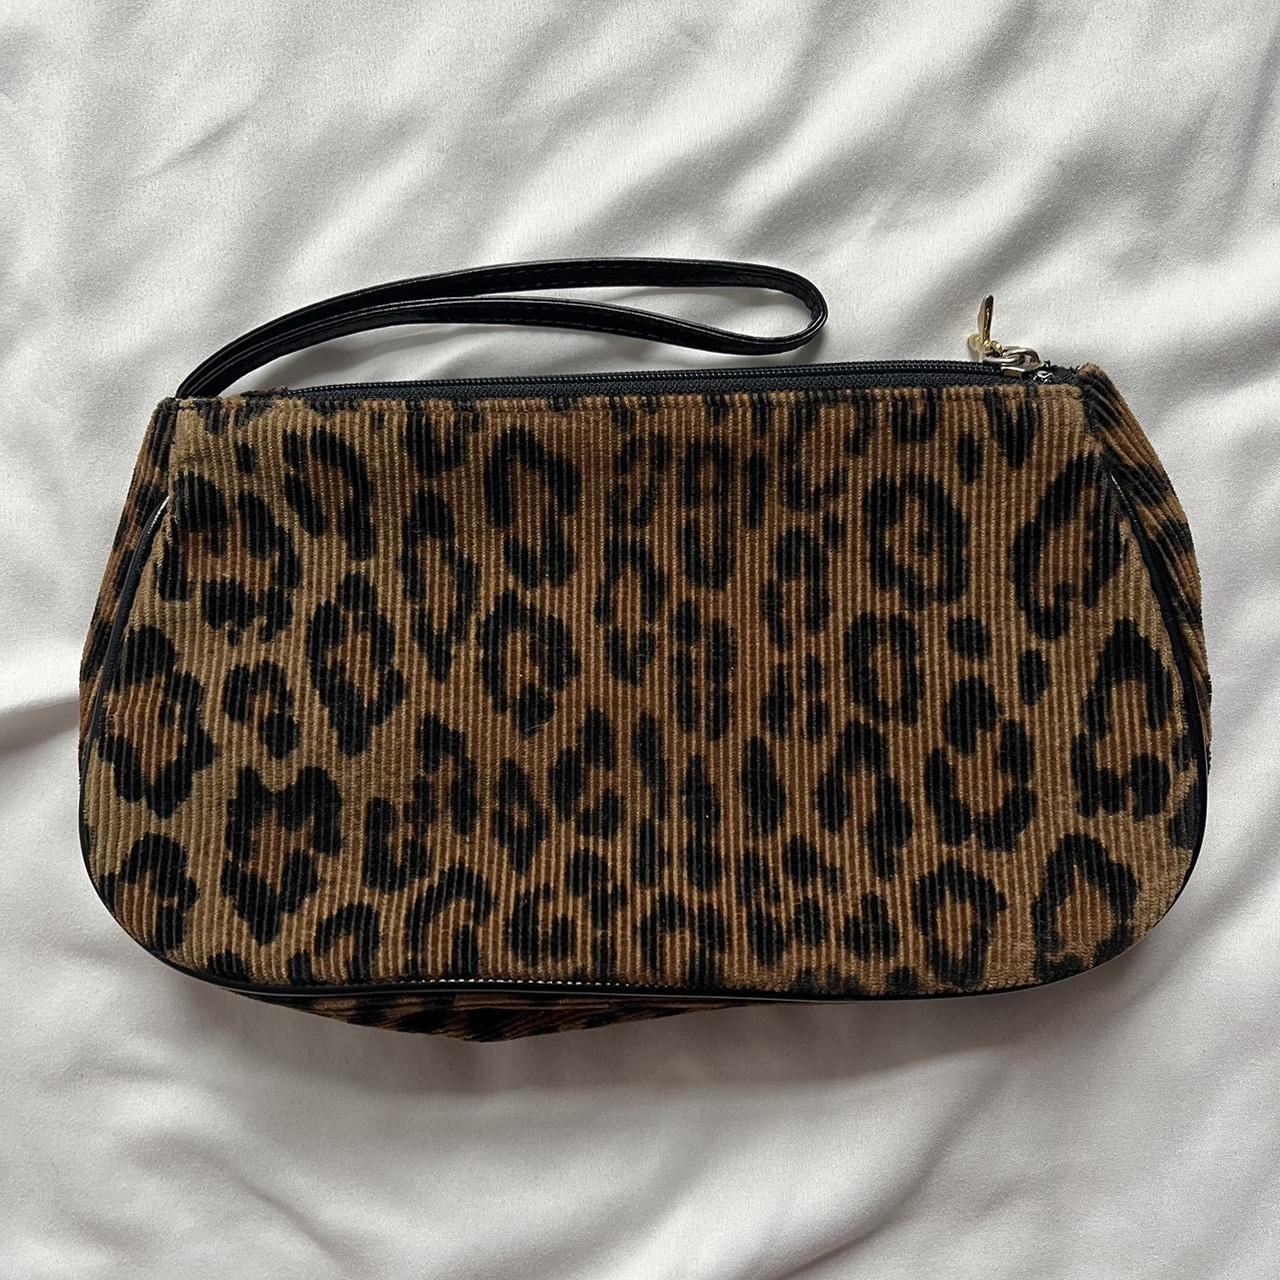 Leopard print makeup bag ️ No damage. Corduroy feel... - Depop